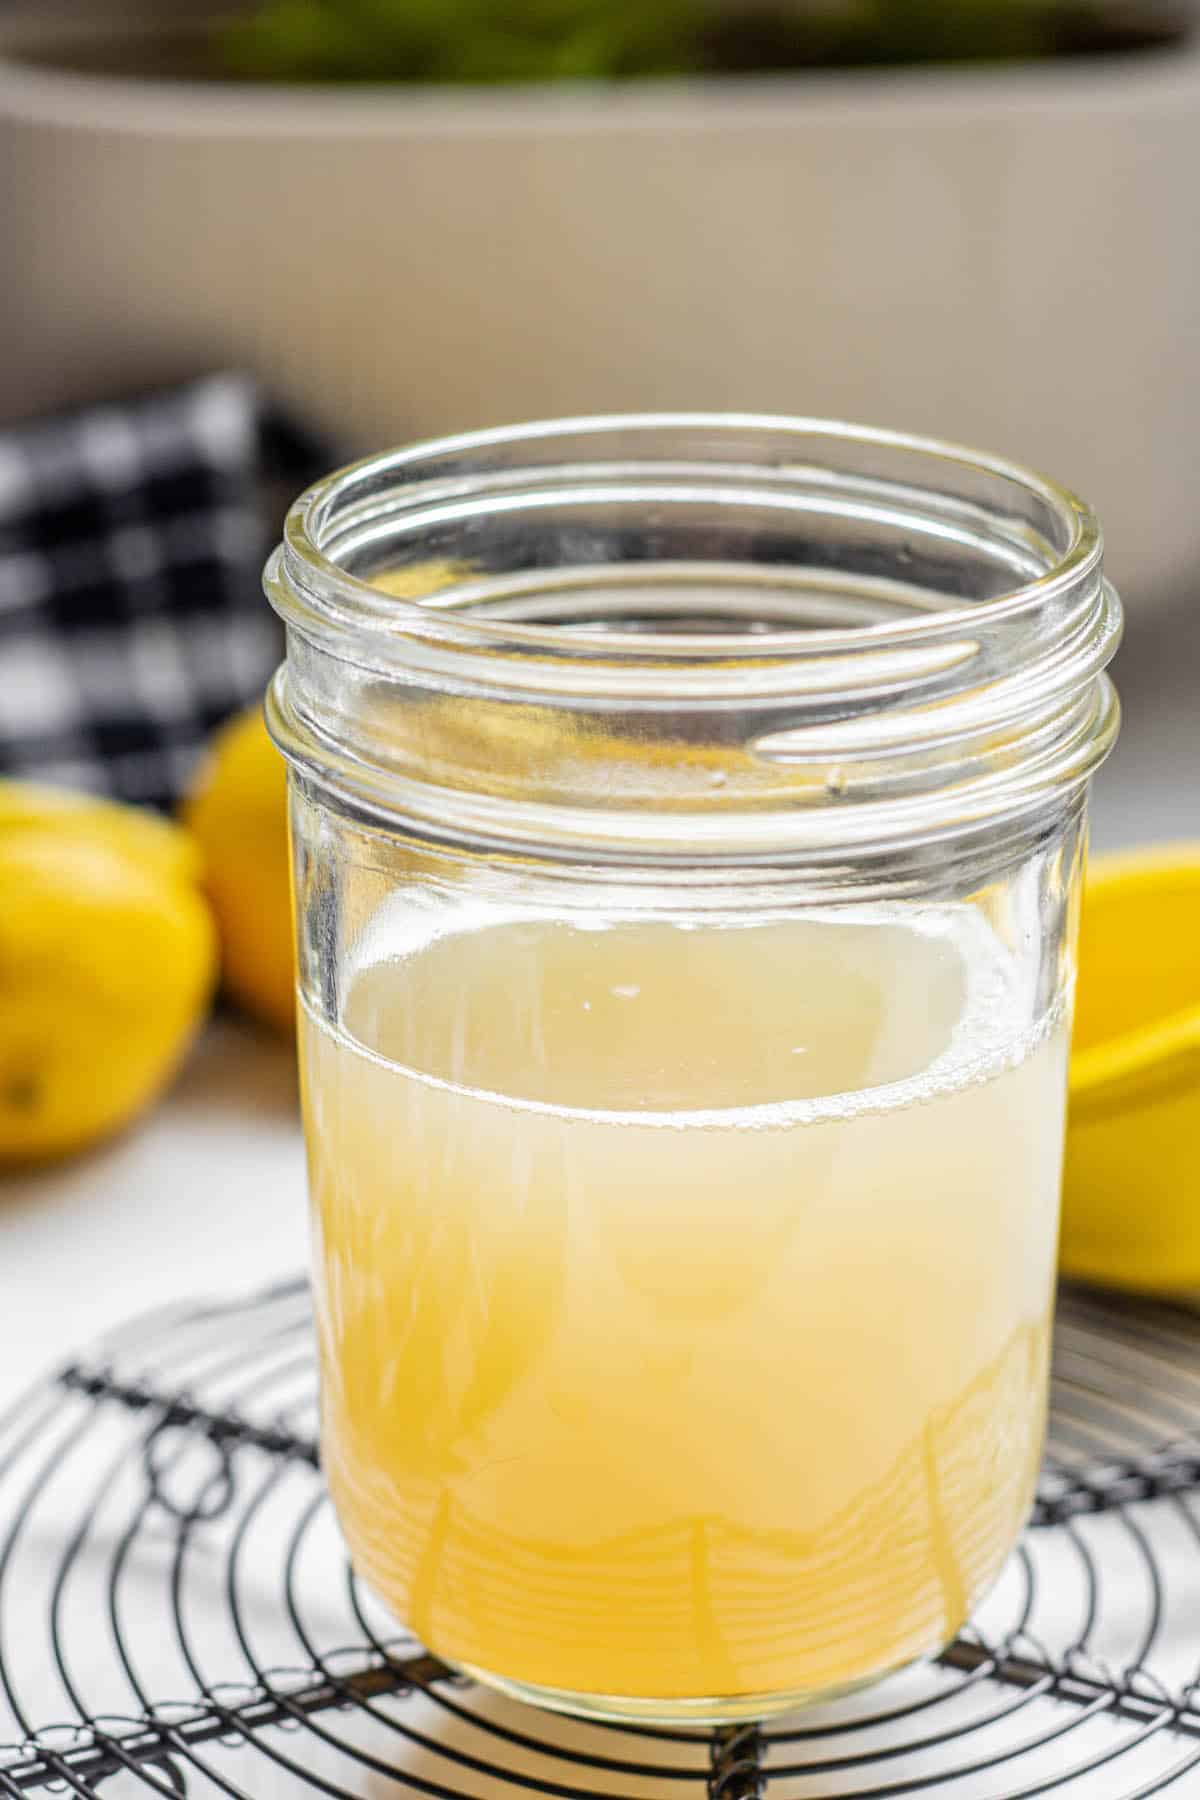 a jar of yellow sour mixture.